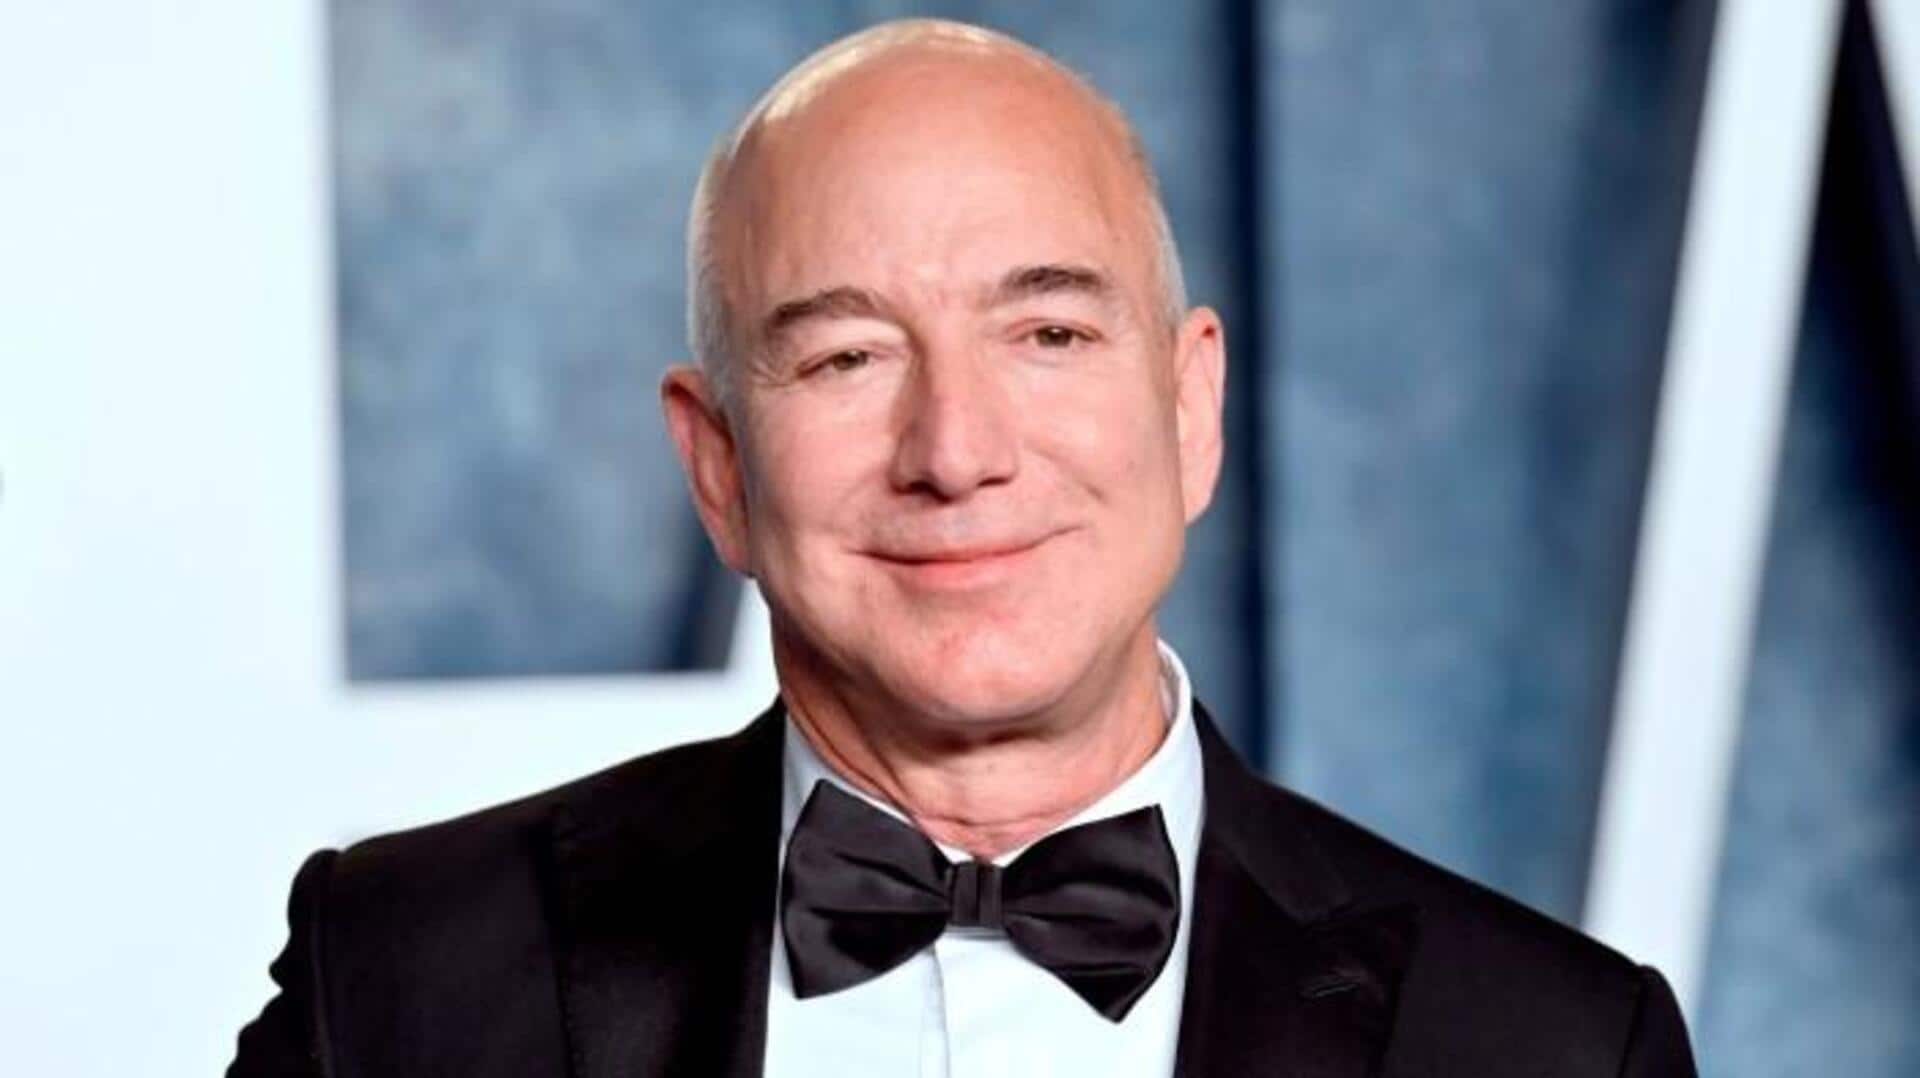 Bezos sells $2B worth of Amazon shares in latest transaction